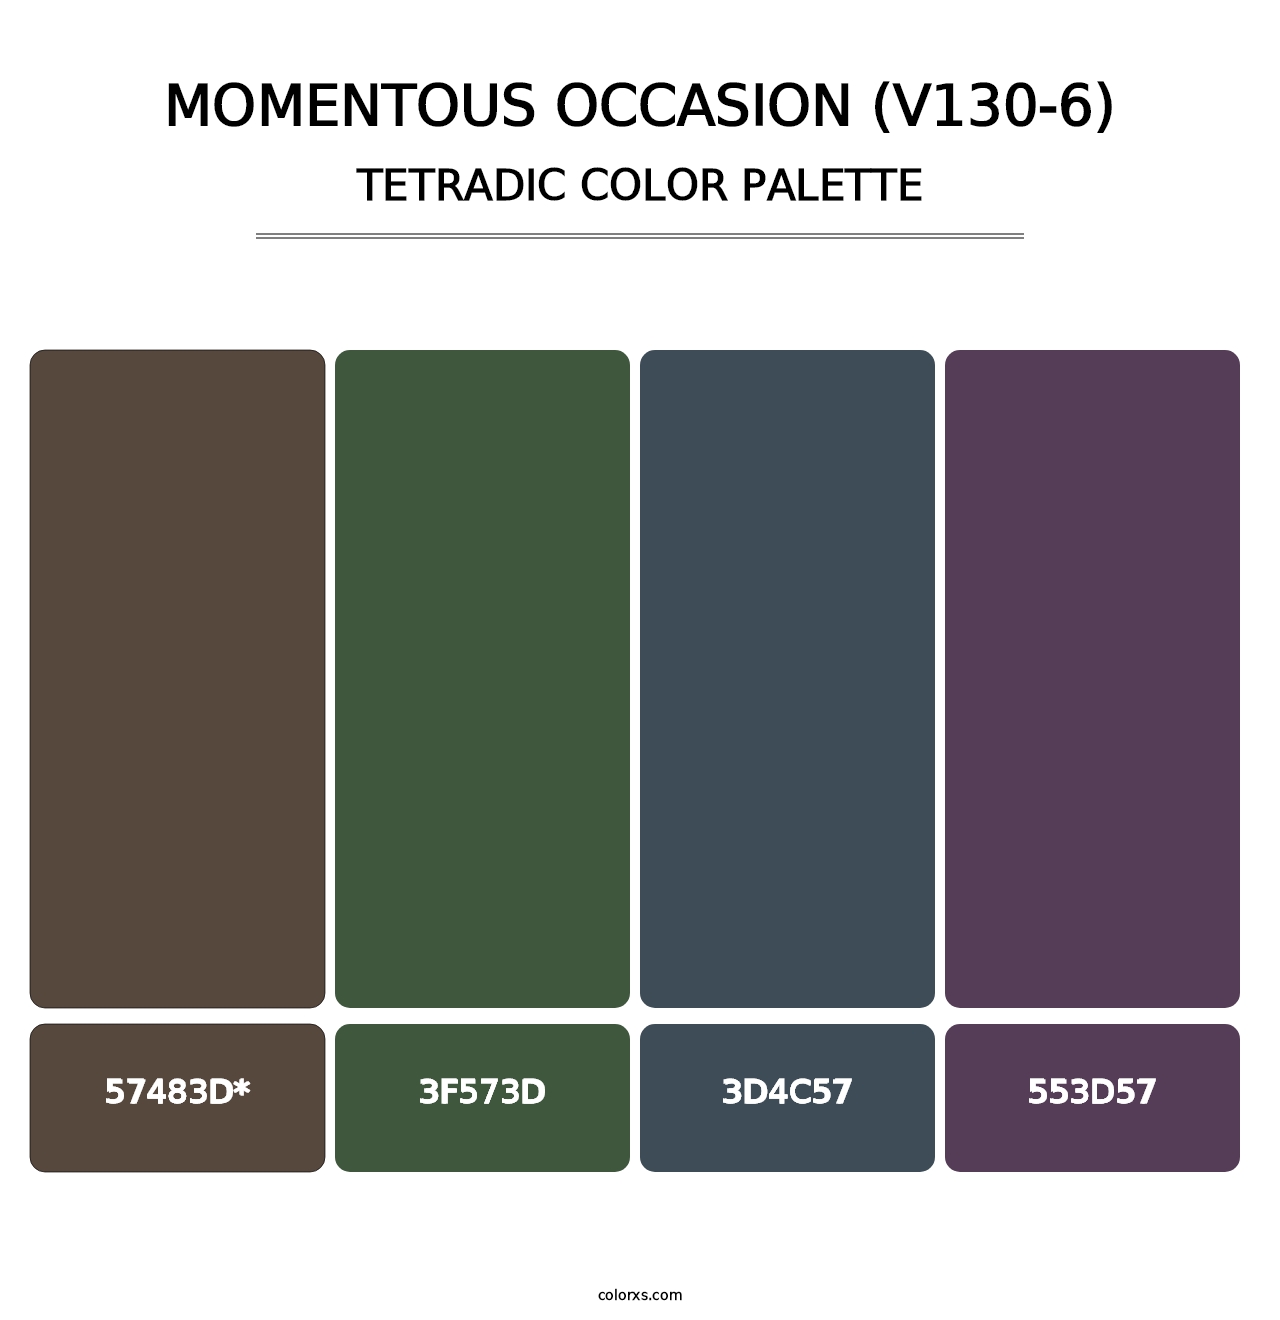 Momentous Occasion (V130-6) - Tetradic Color Palette